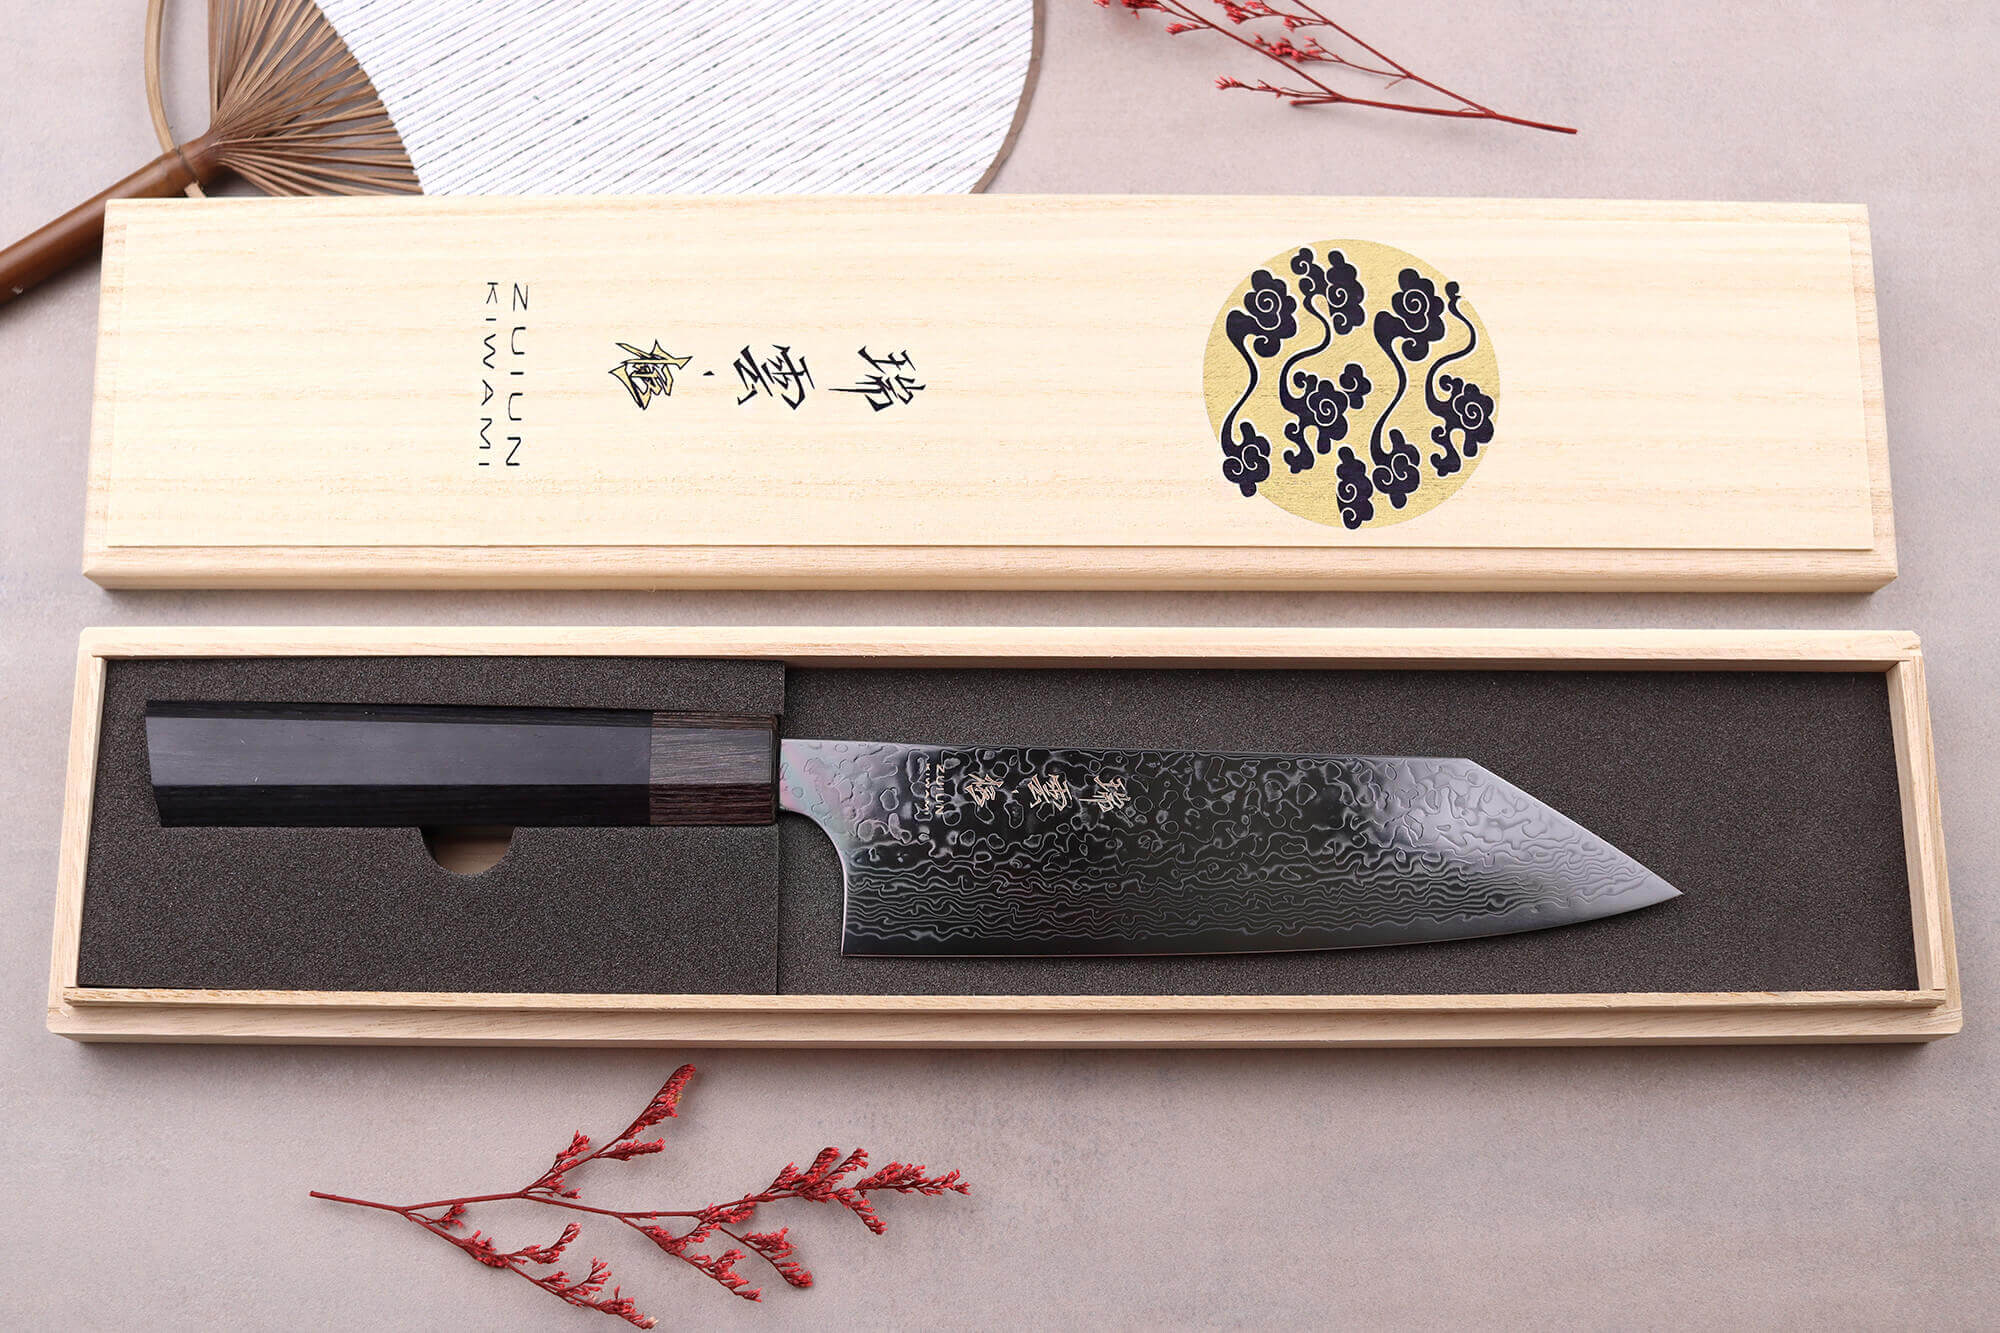 Couteau japonais Kane Tsune gamme YS-900 - Couteau santoku 18 cm